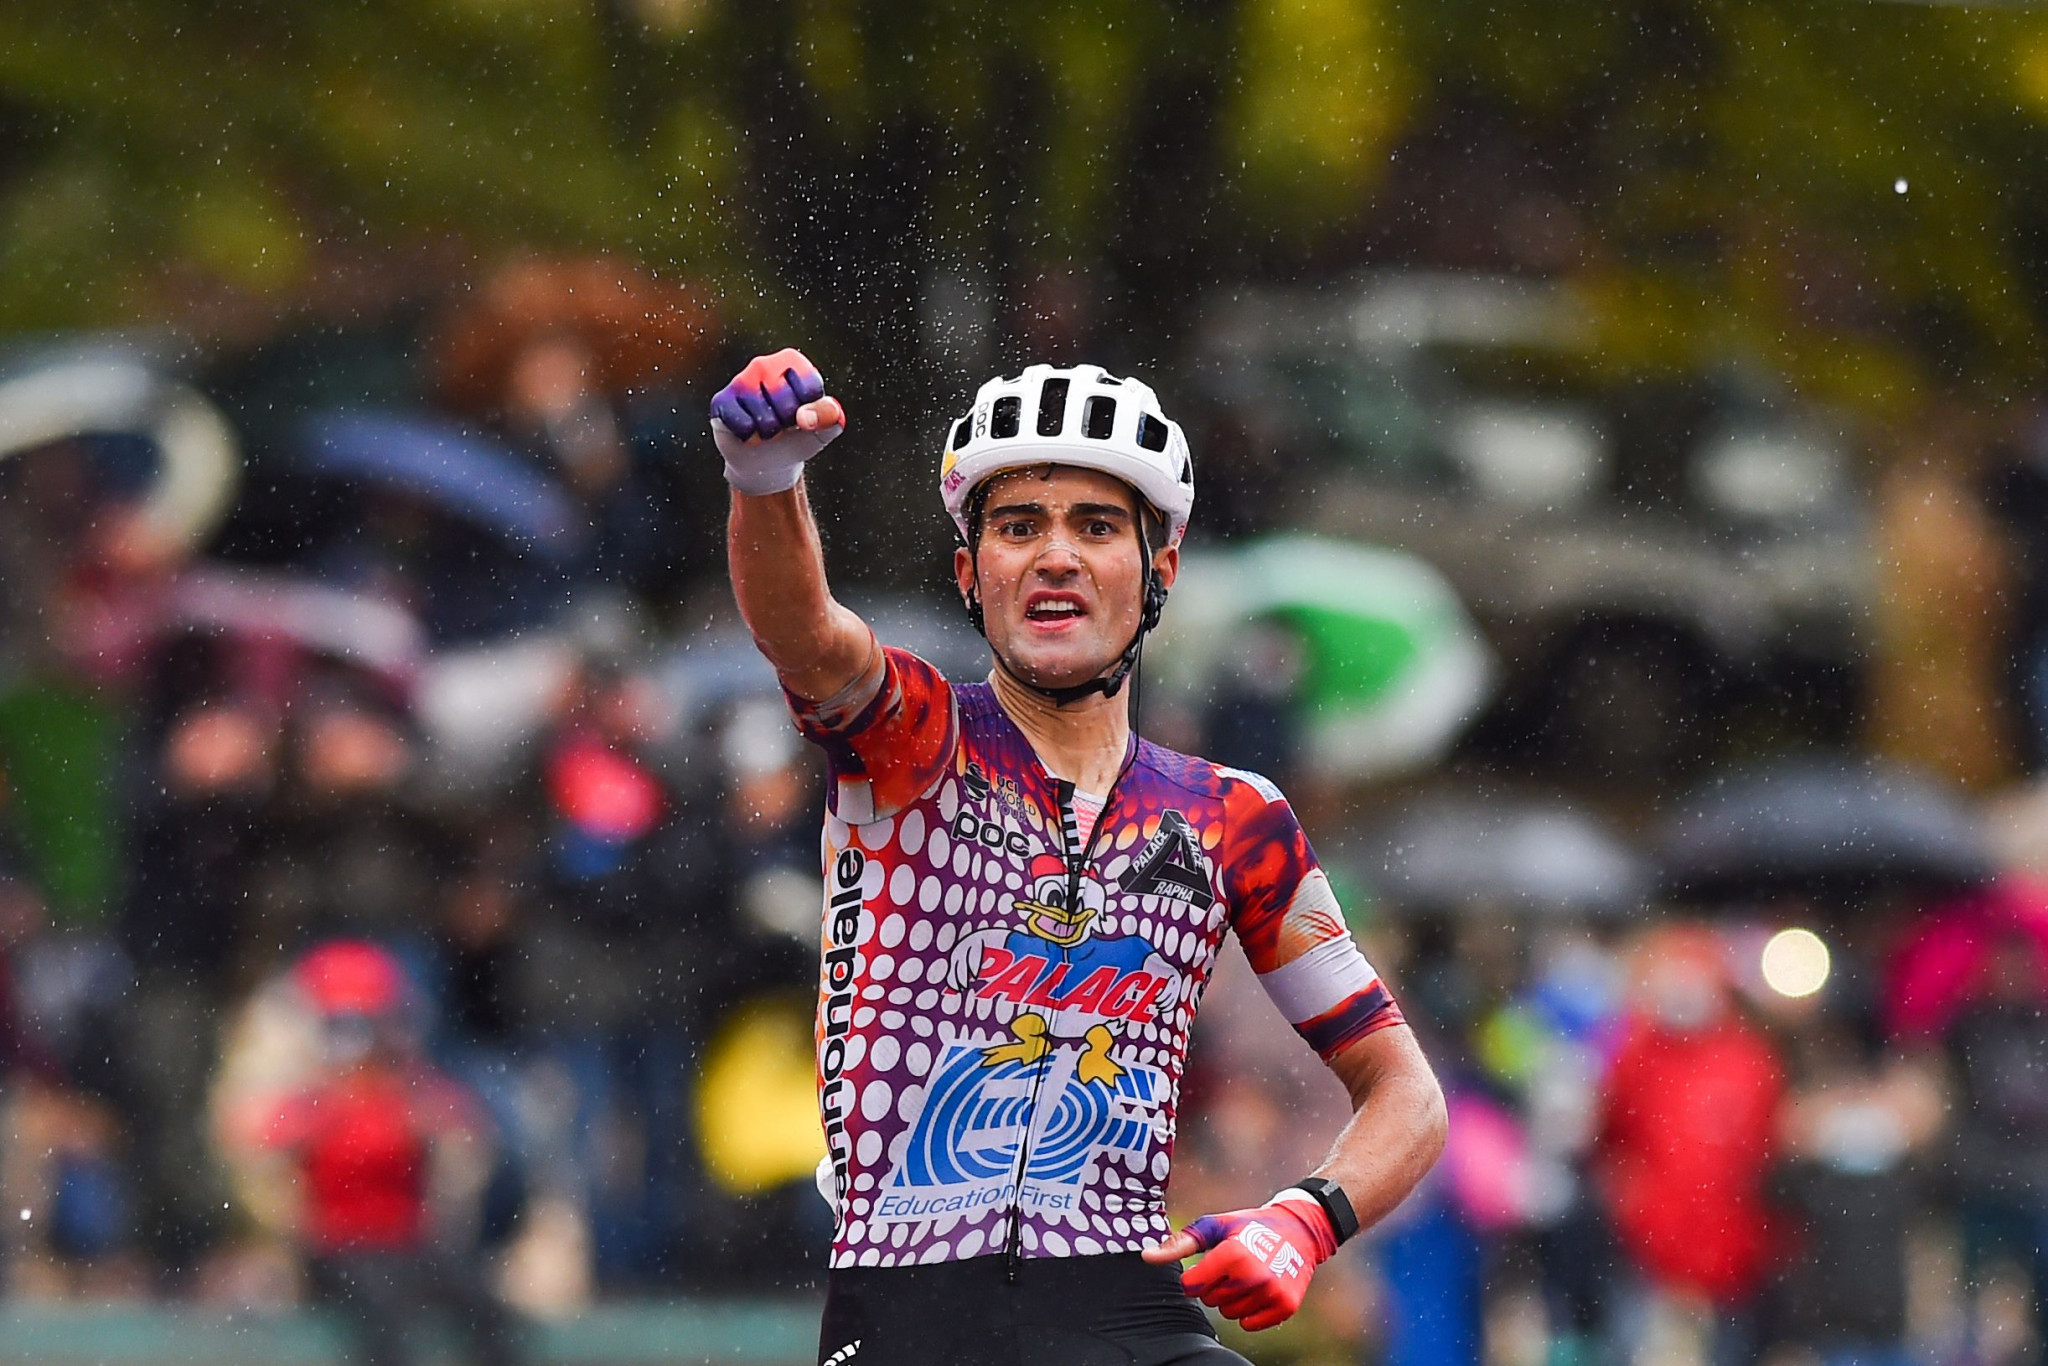 Guerreiro wins first Grand Tour stage as Almeida's Giro lead cut